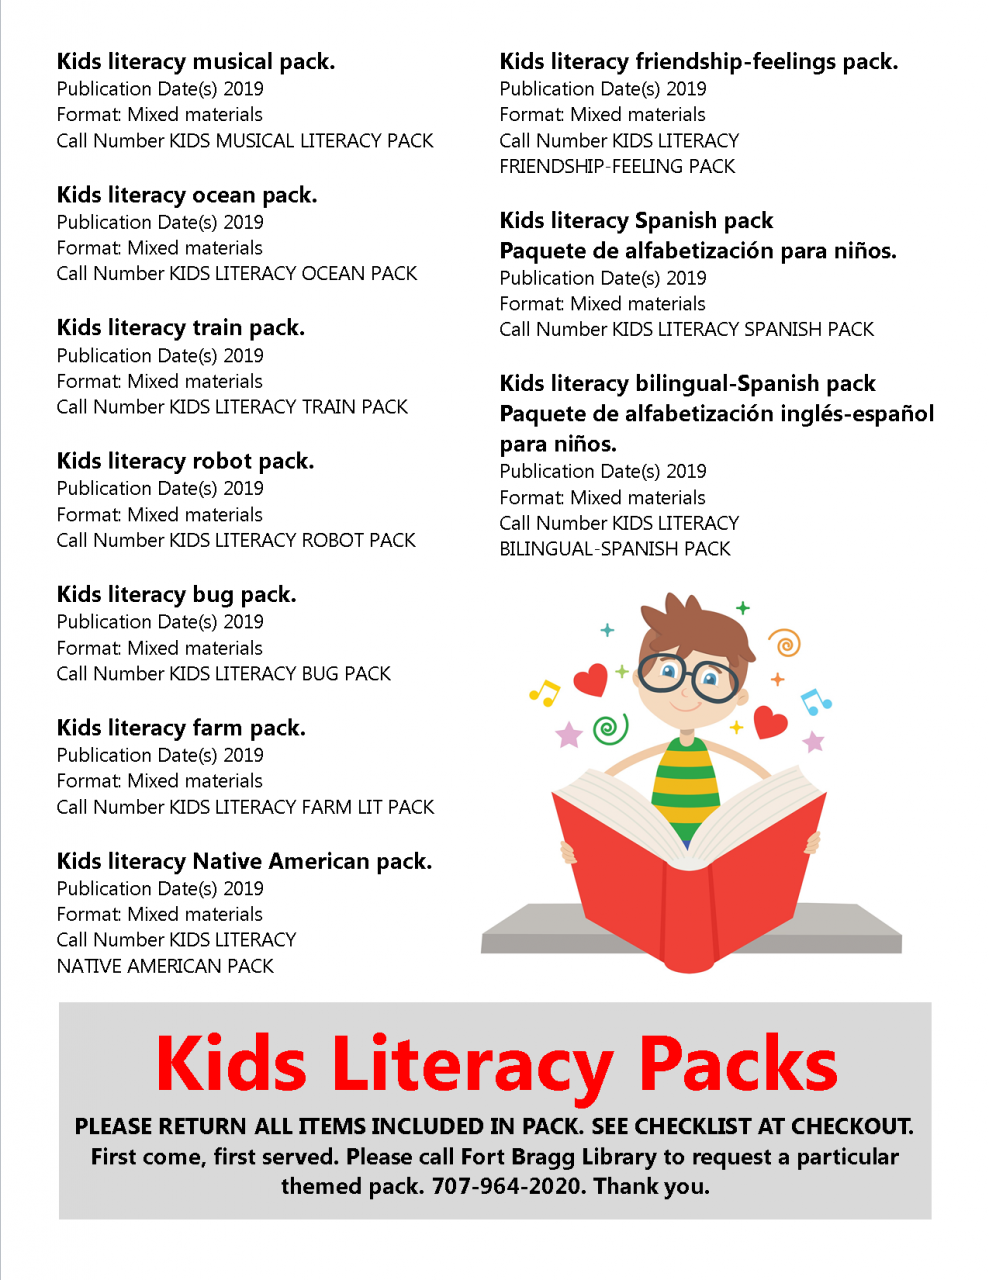 Kids Literacy Packs